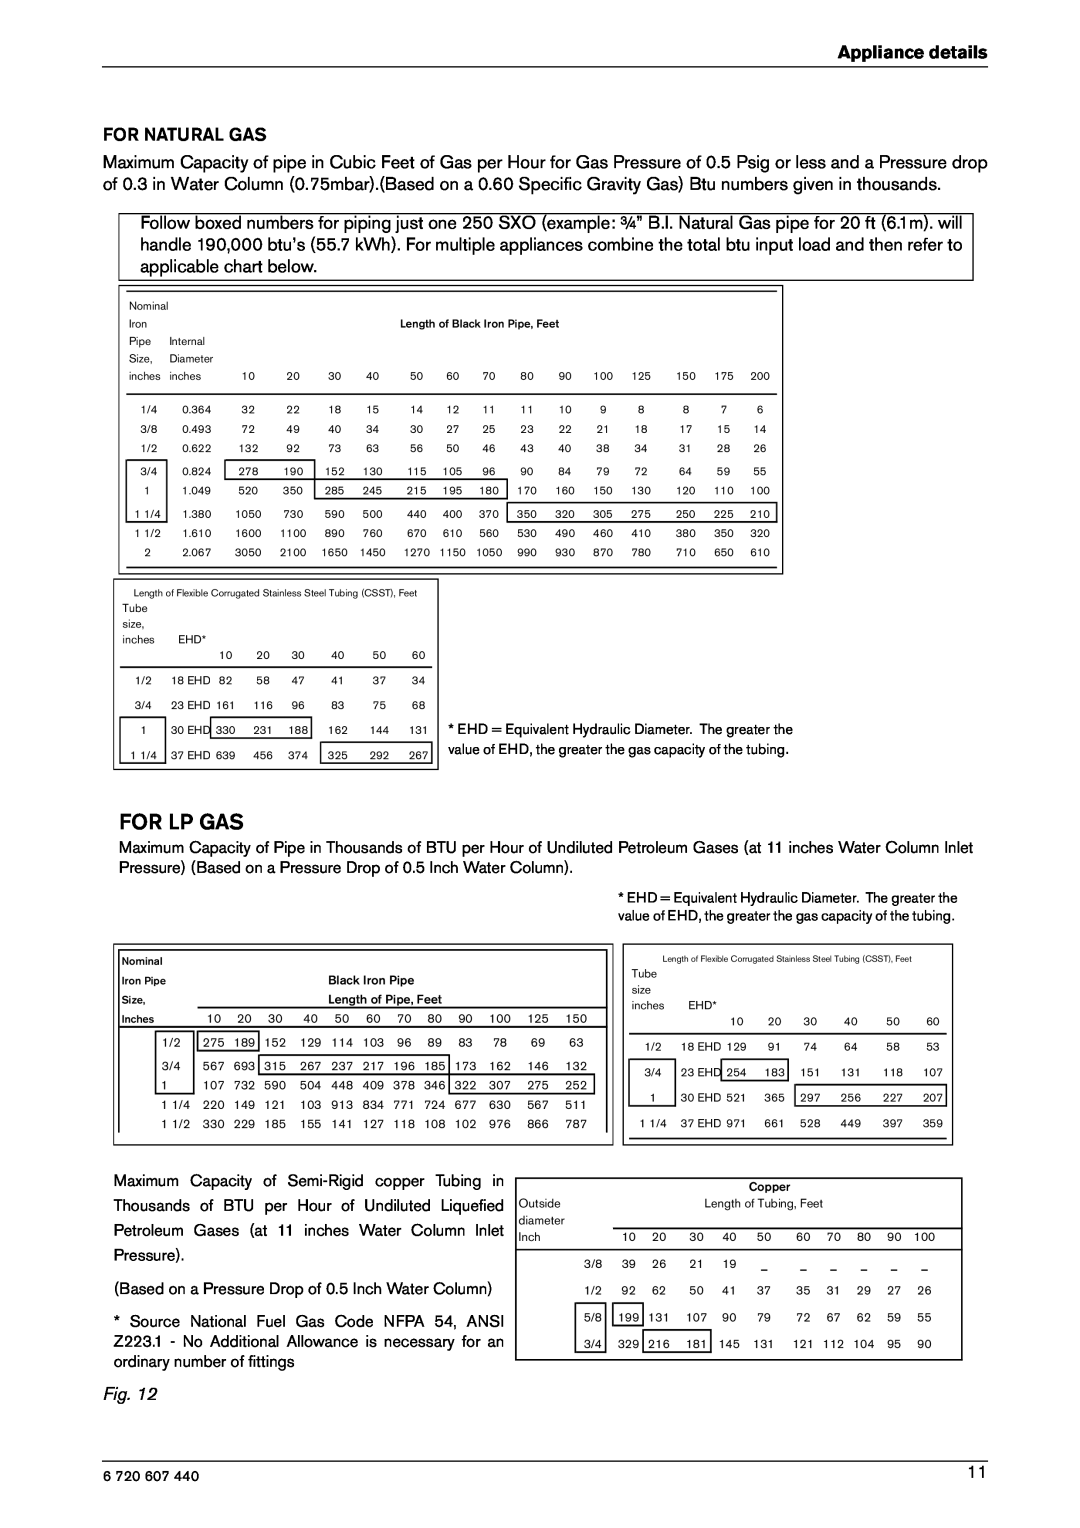 Bosch Appliances 250 SXO LP, 250 SXO NG manual For Lp Gas, Appliance details FOR NATURAL GAS 